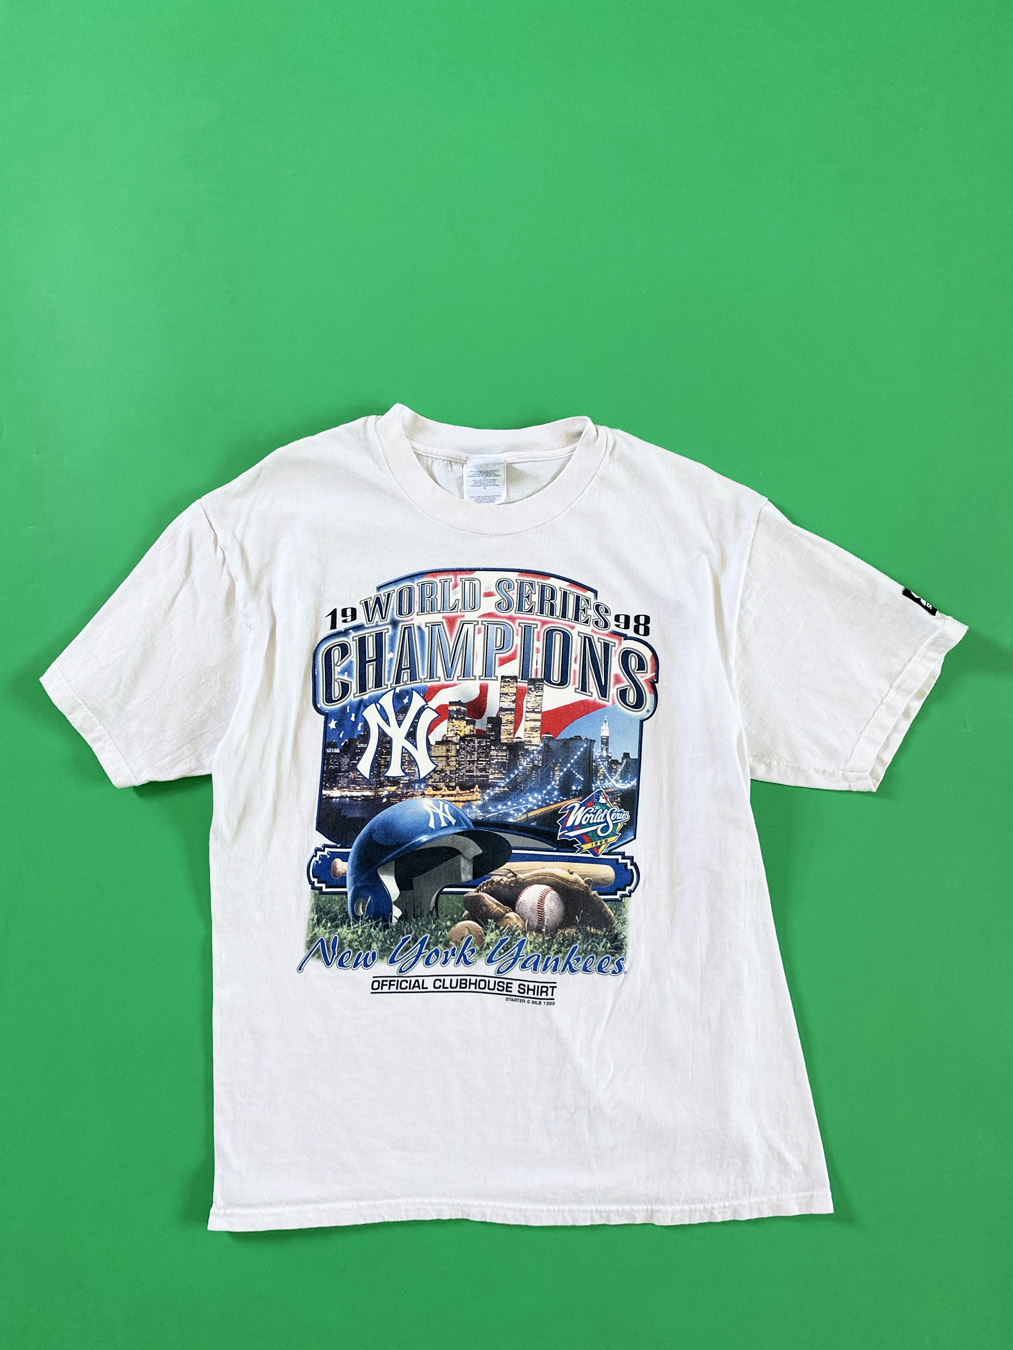 New York Yankees Homage 1998 World Series Champions Tri-Blend T-Shirt - Navy